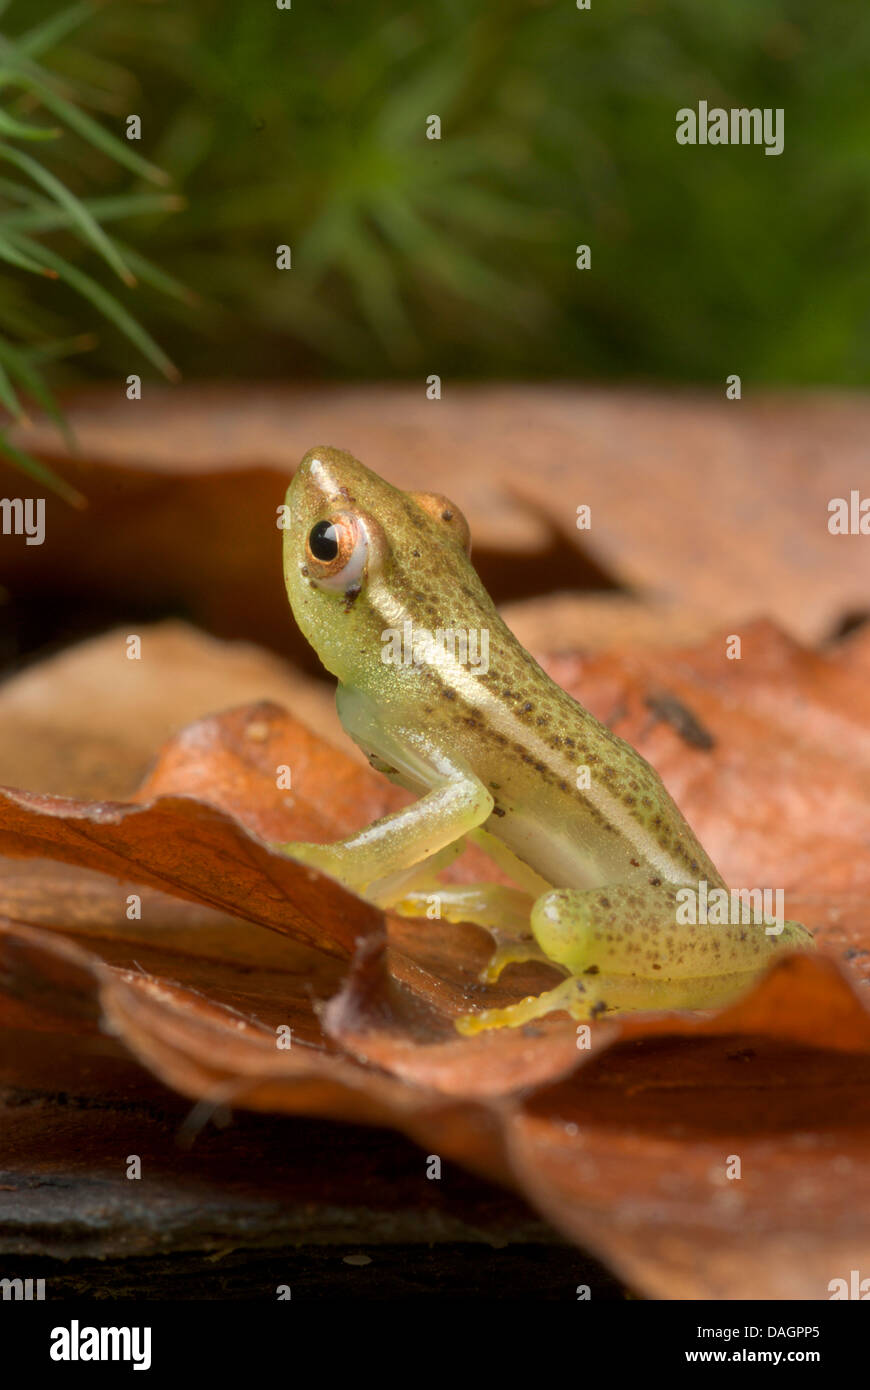 Longnose Reed Frog, Sharp-nosed African reed frog (Hyperolius nasutus), on limp leaf Stock Photo